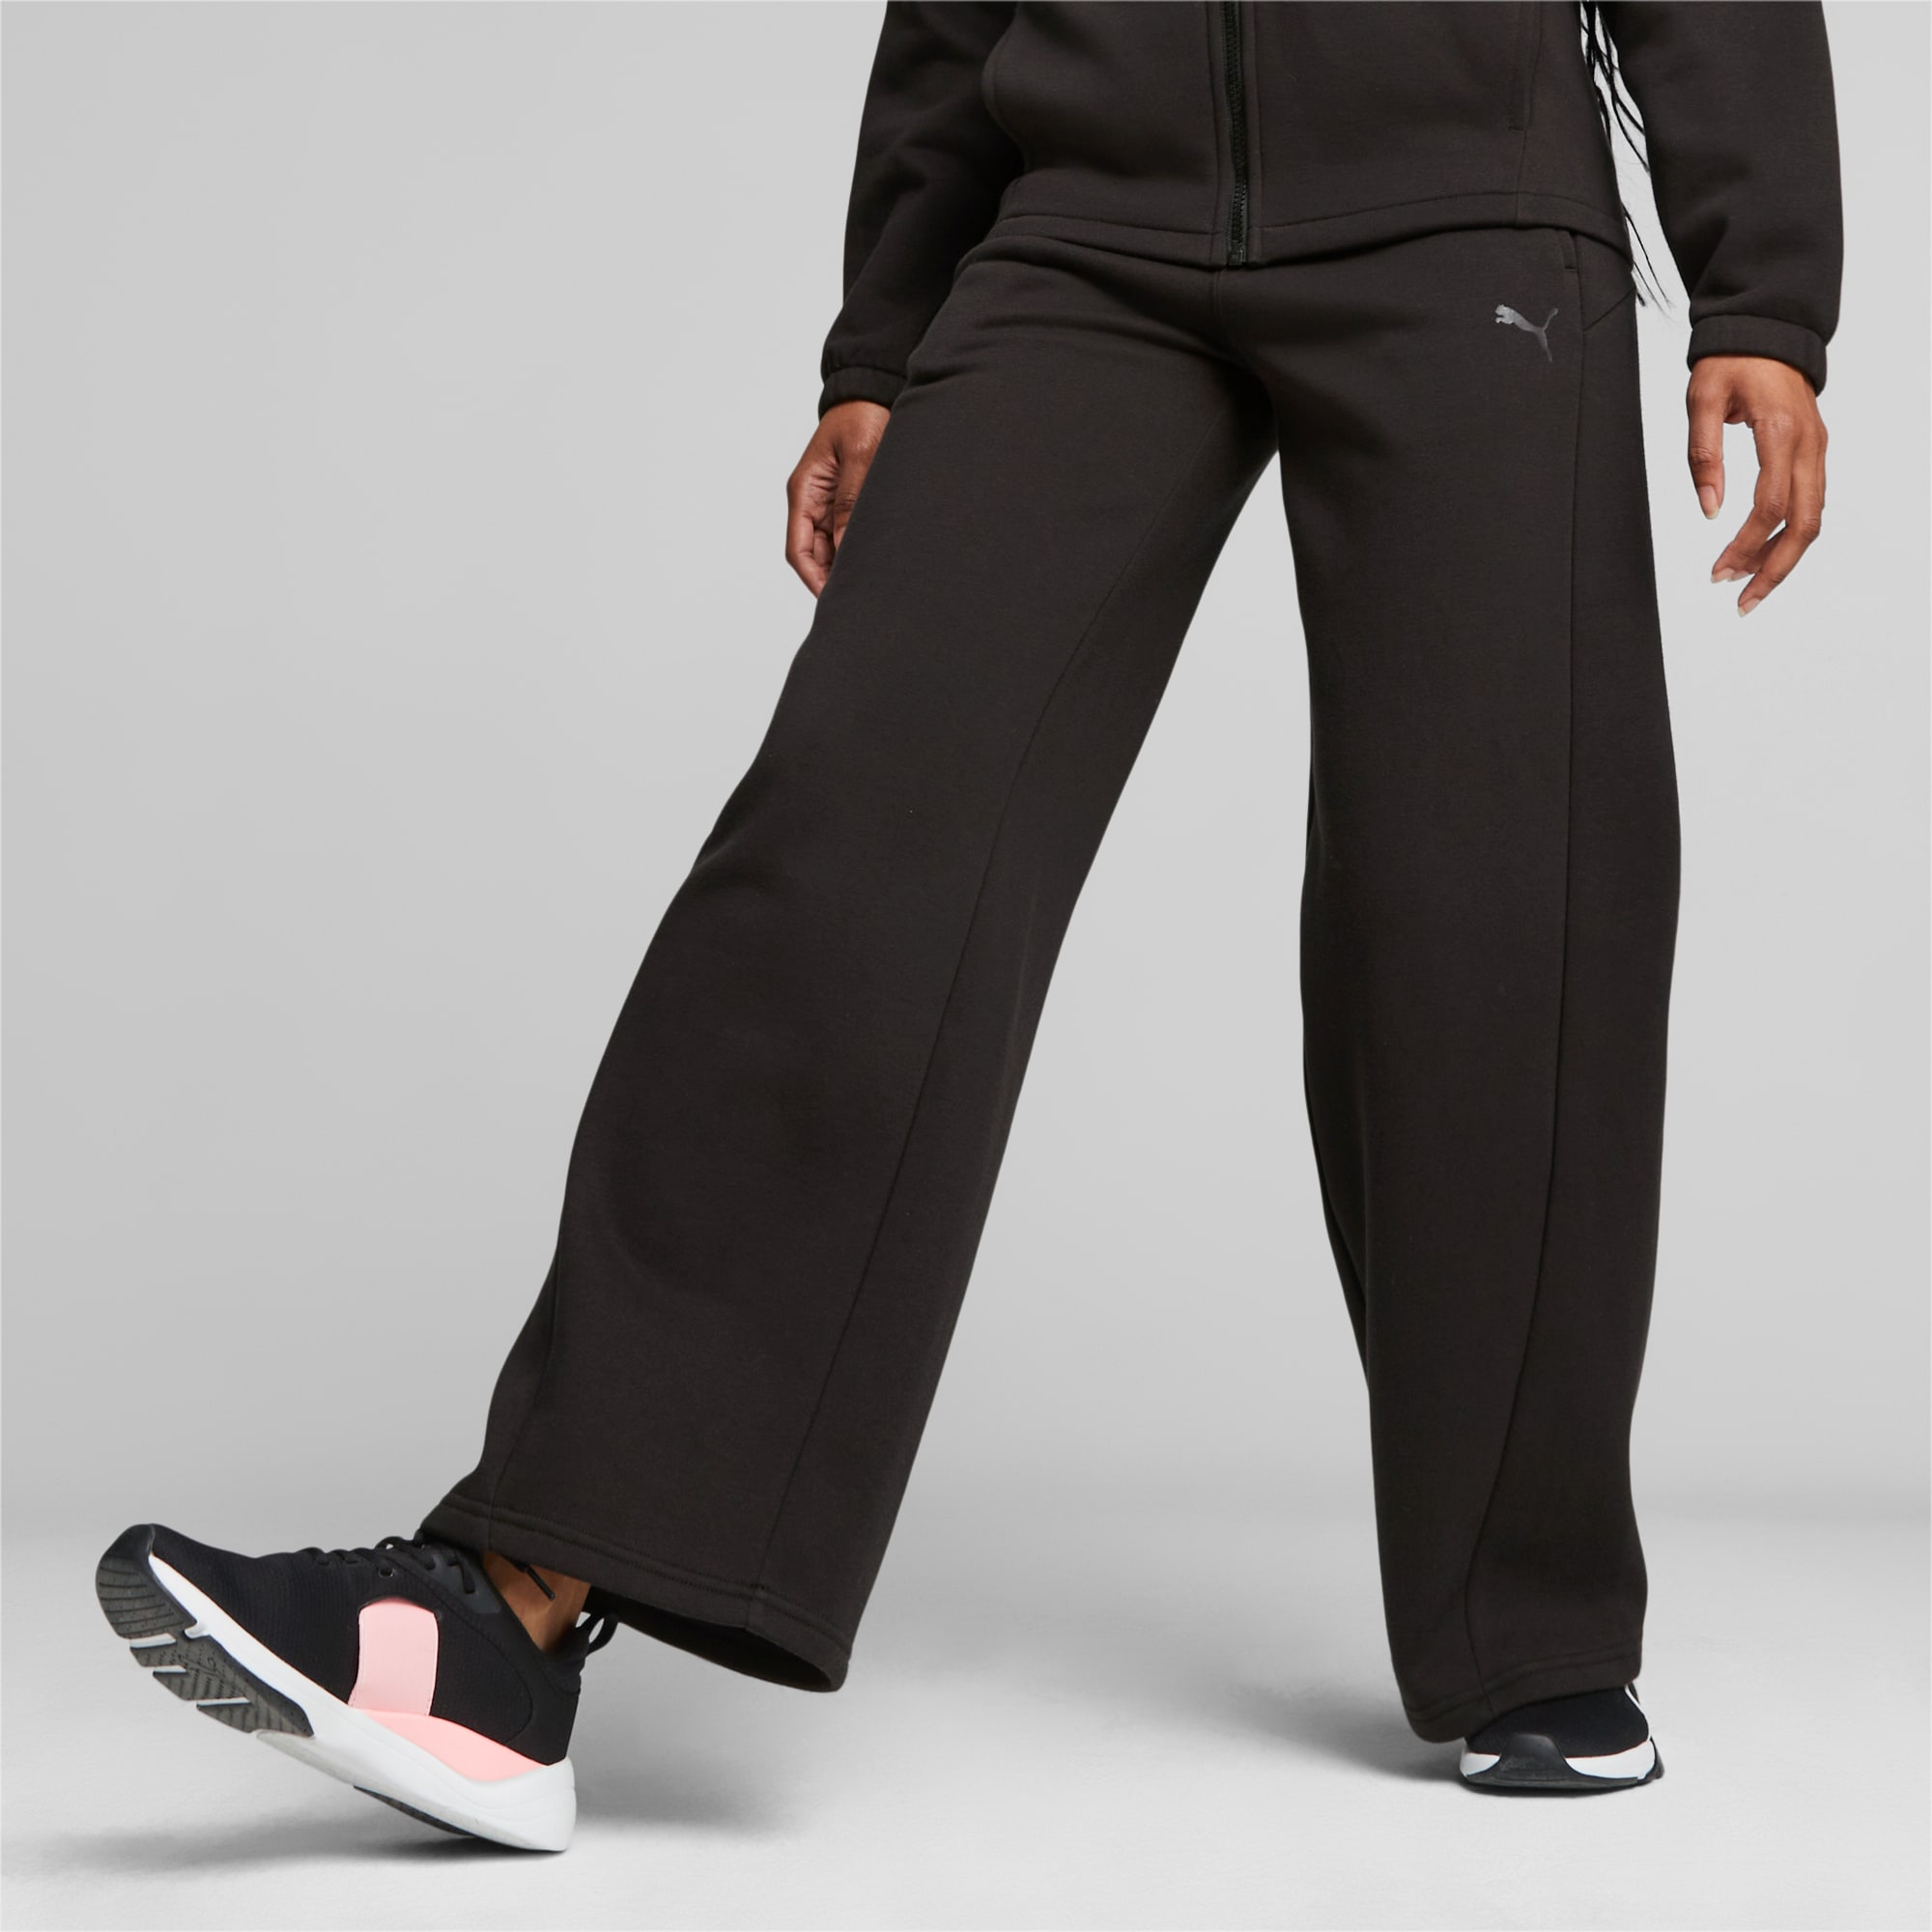 All In Motion Sweatpants Running Pants Light Mjnt Women Size Medium Pockets